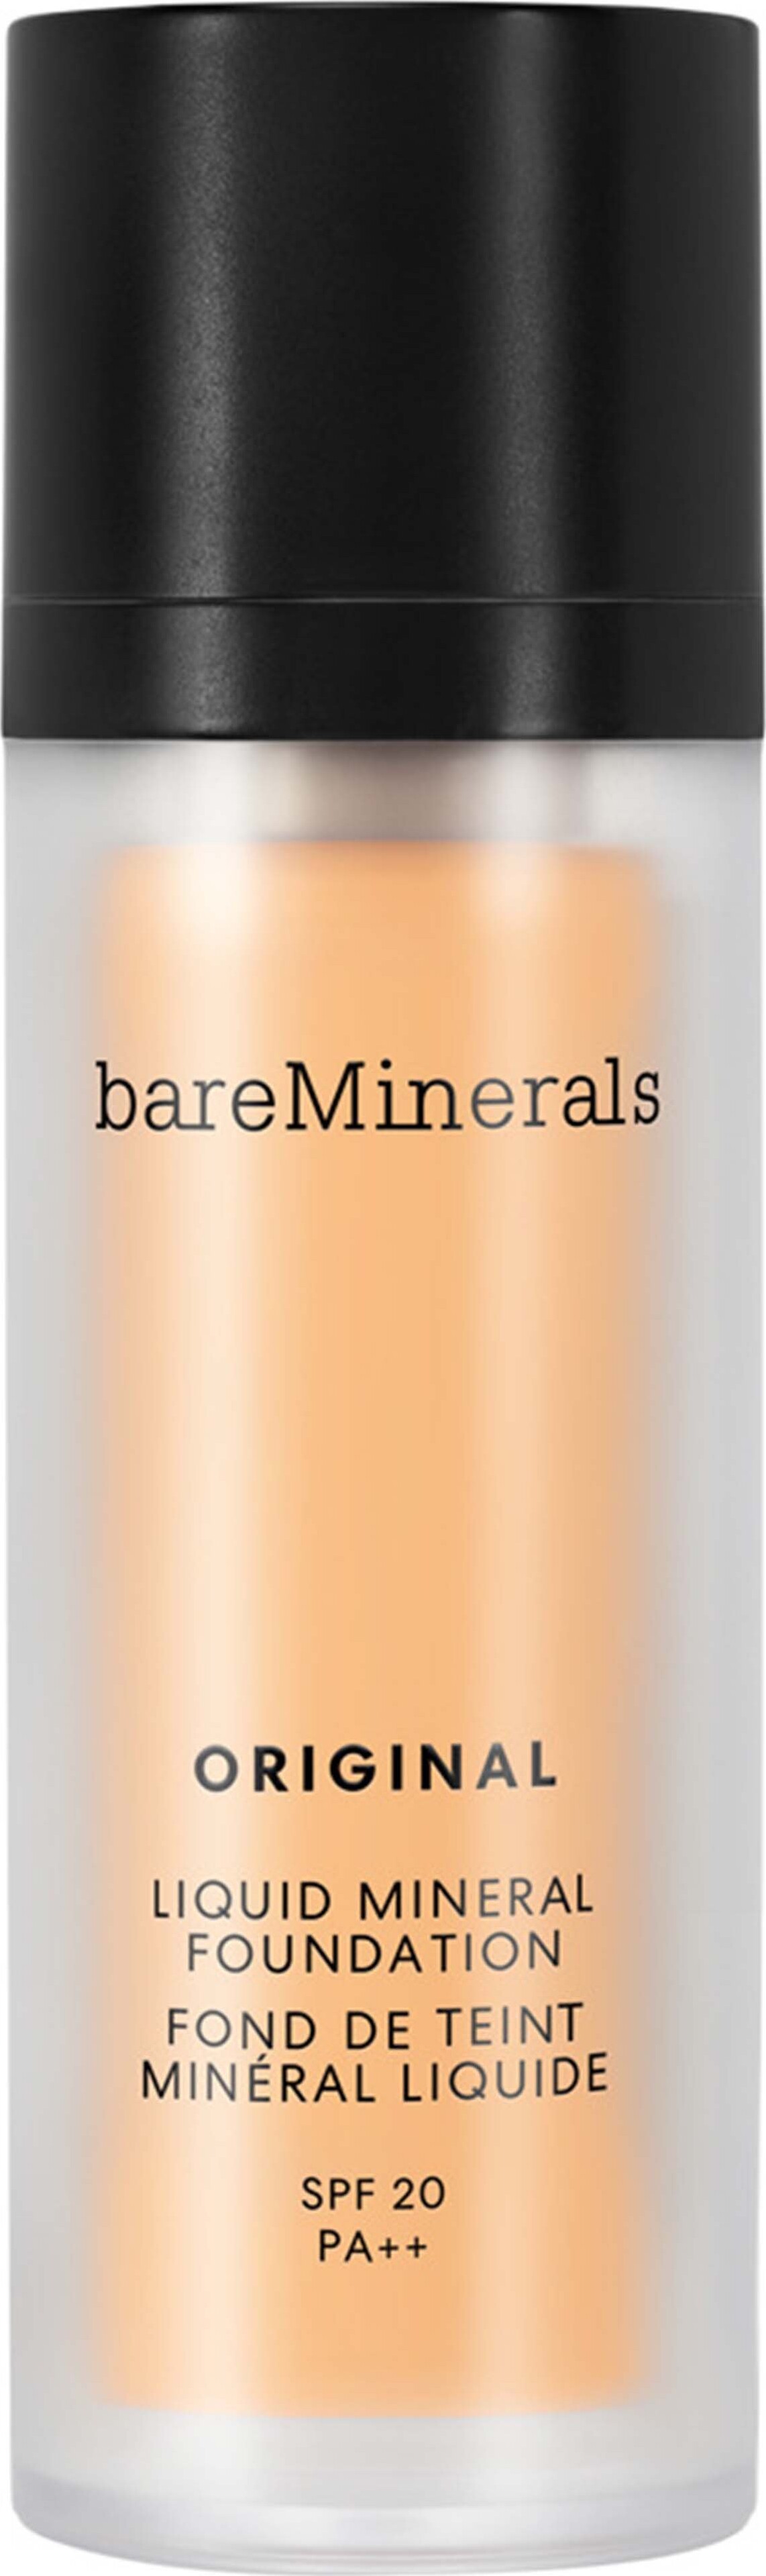 Bareminerals - Original Liquid Mineral Foundation - Light 08